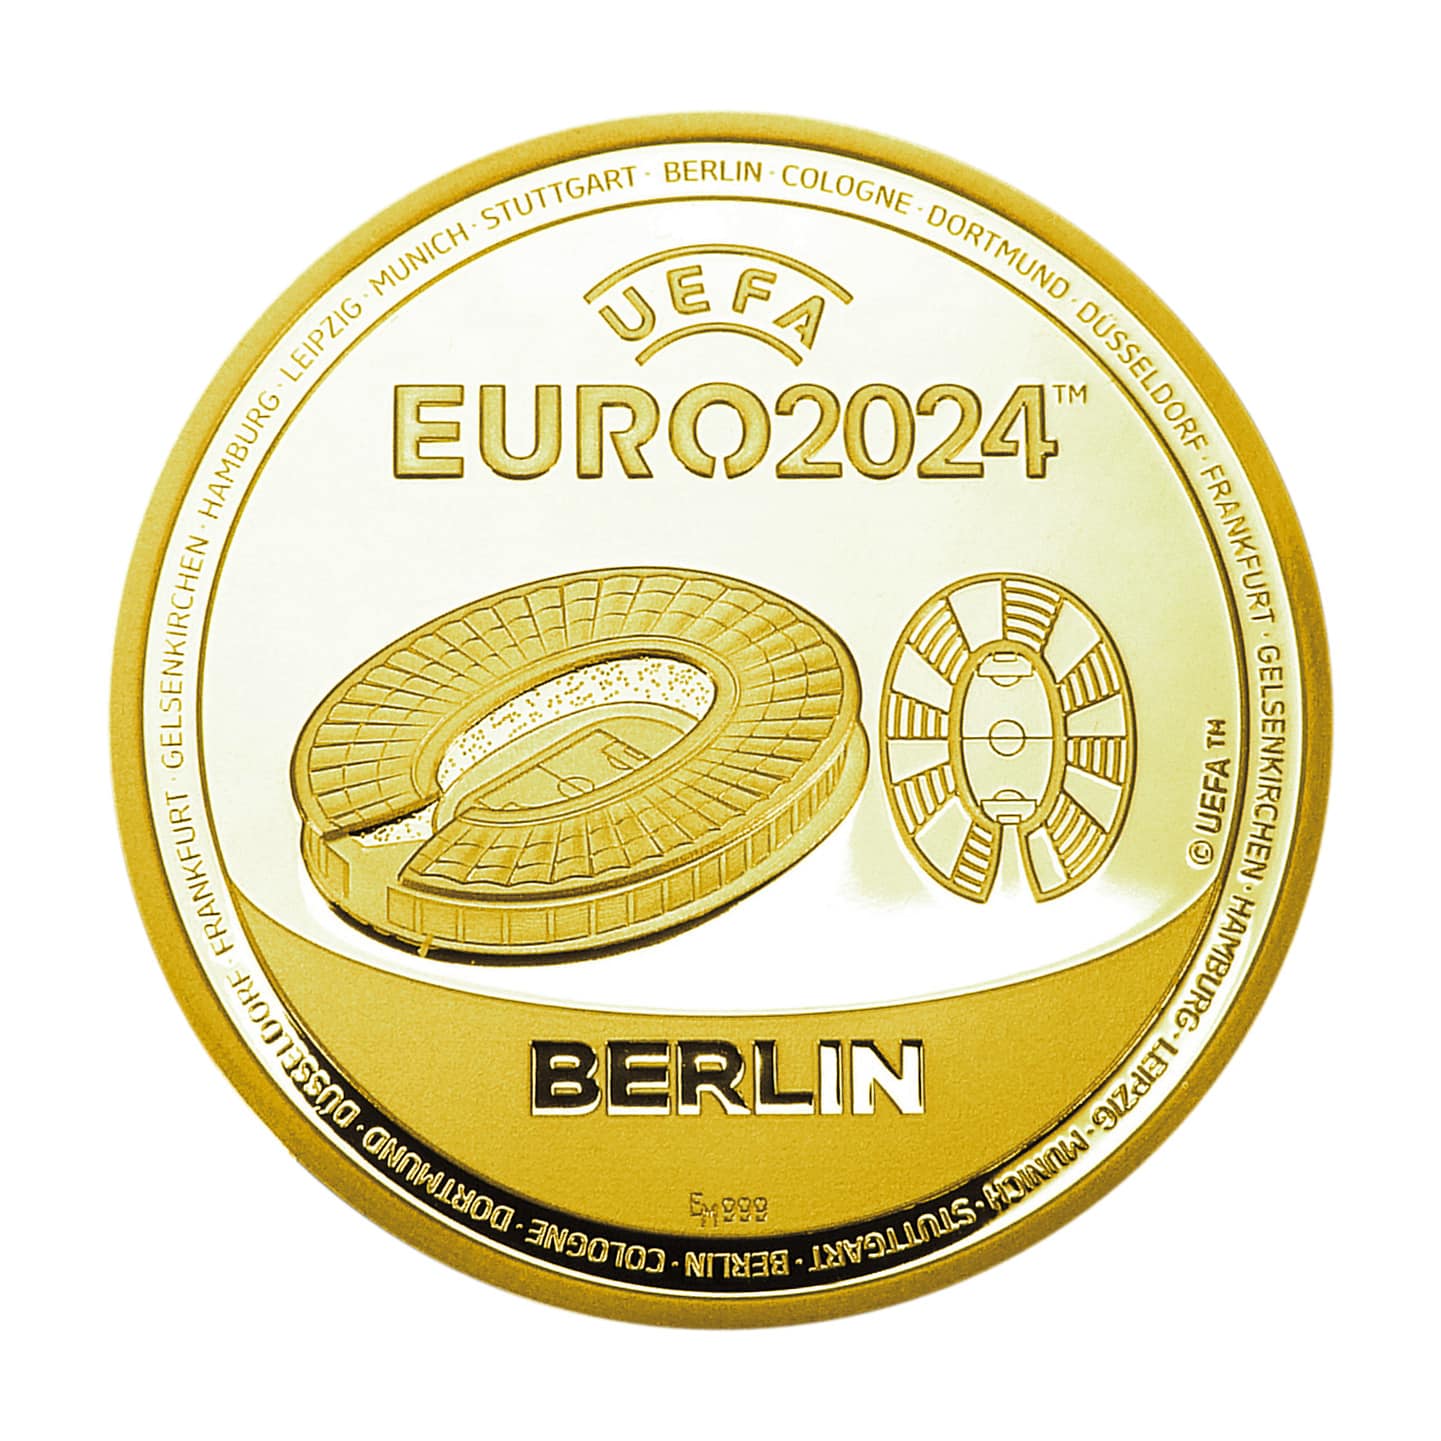 UEFA EURO 2024 Berlin